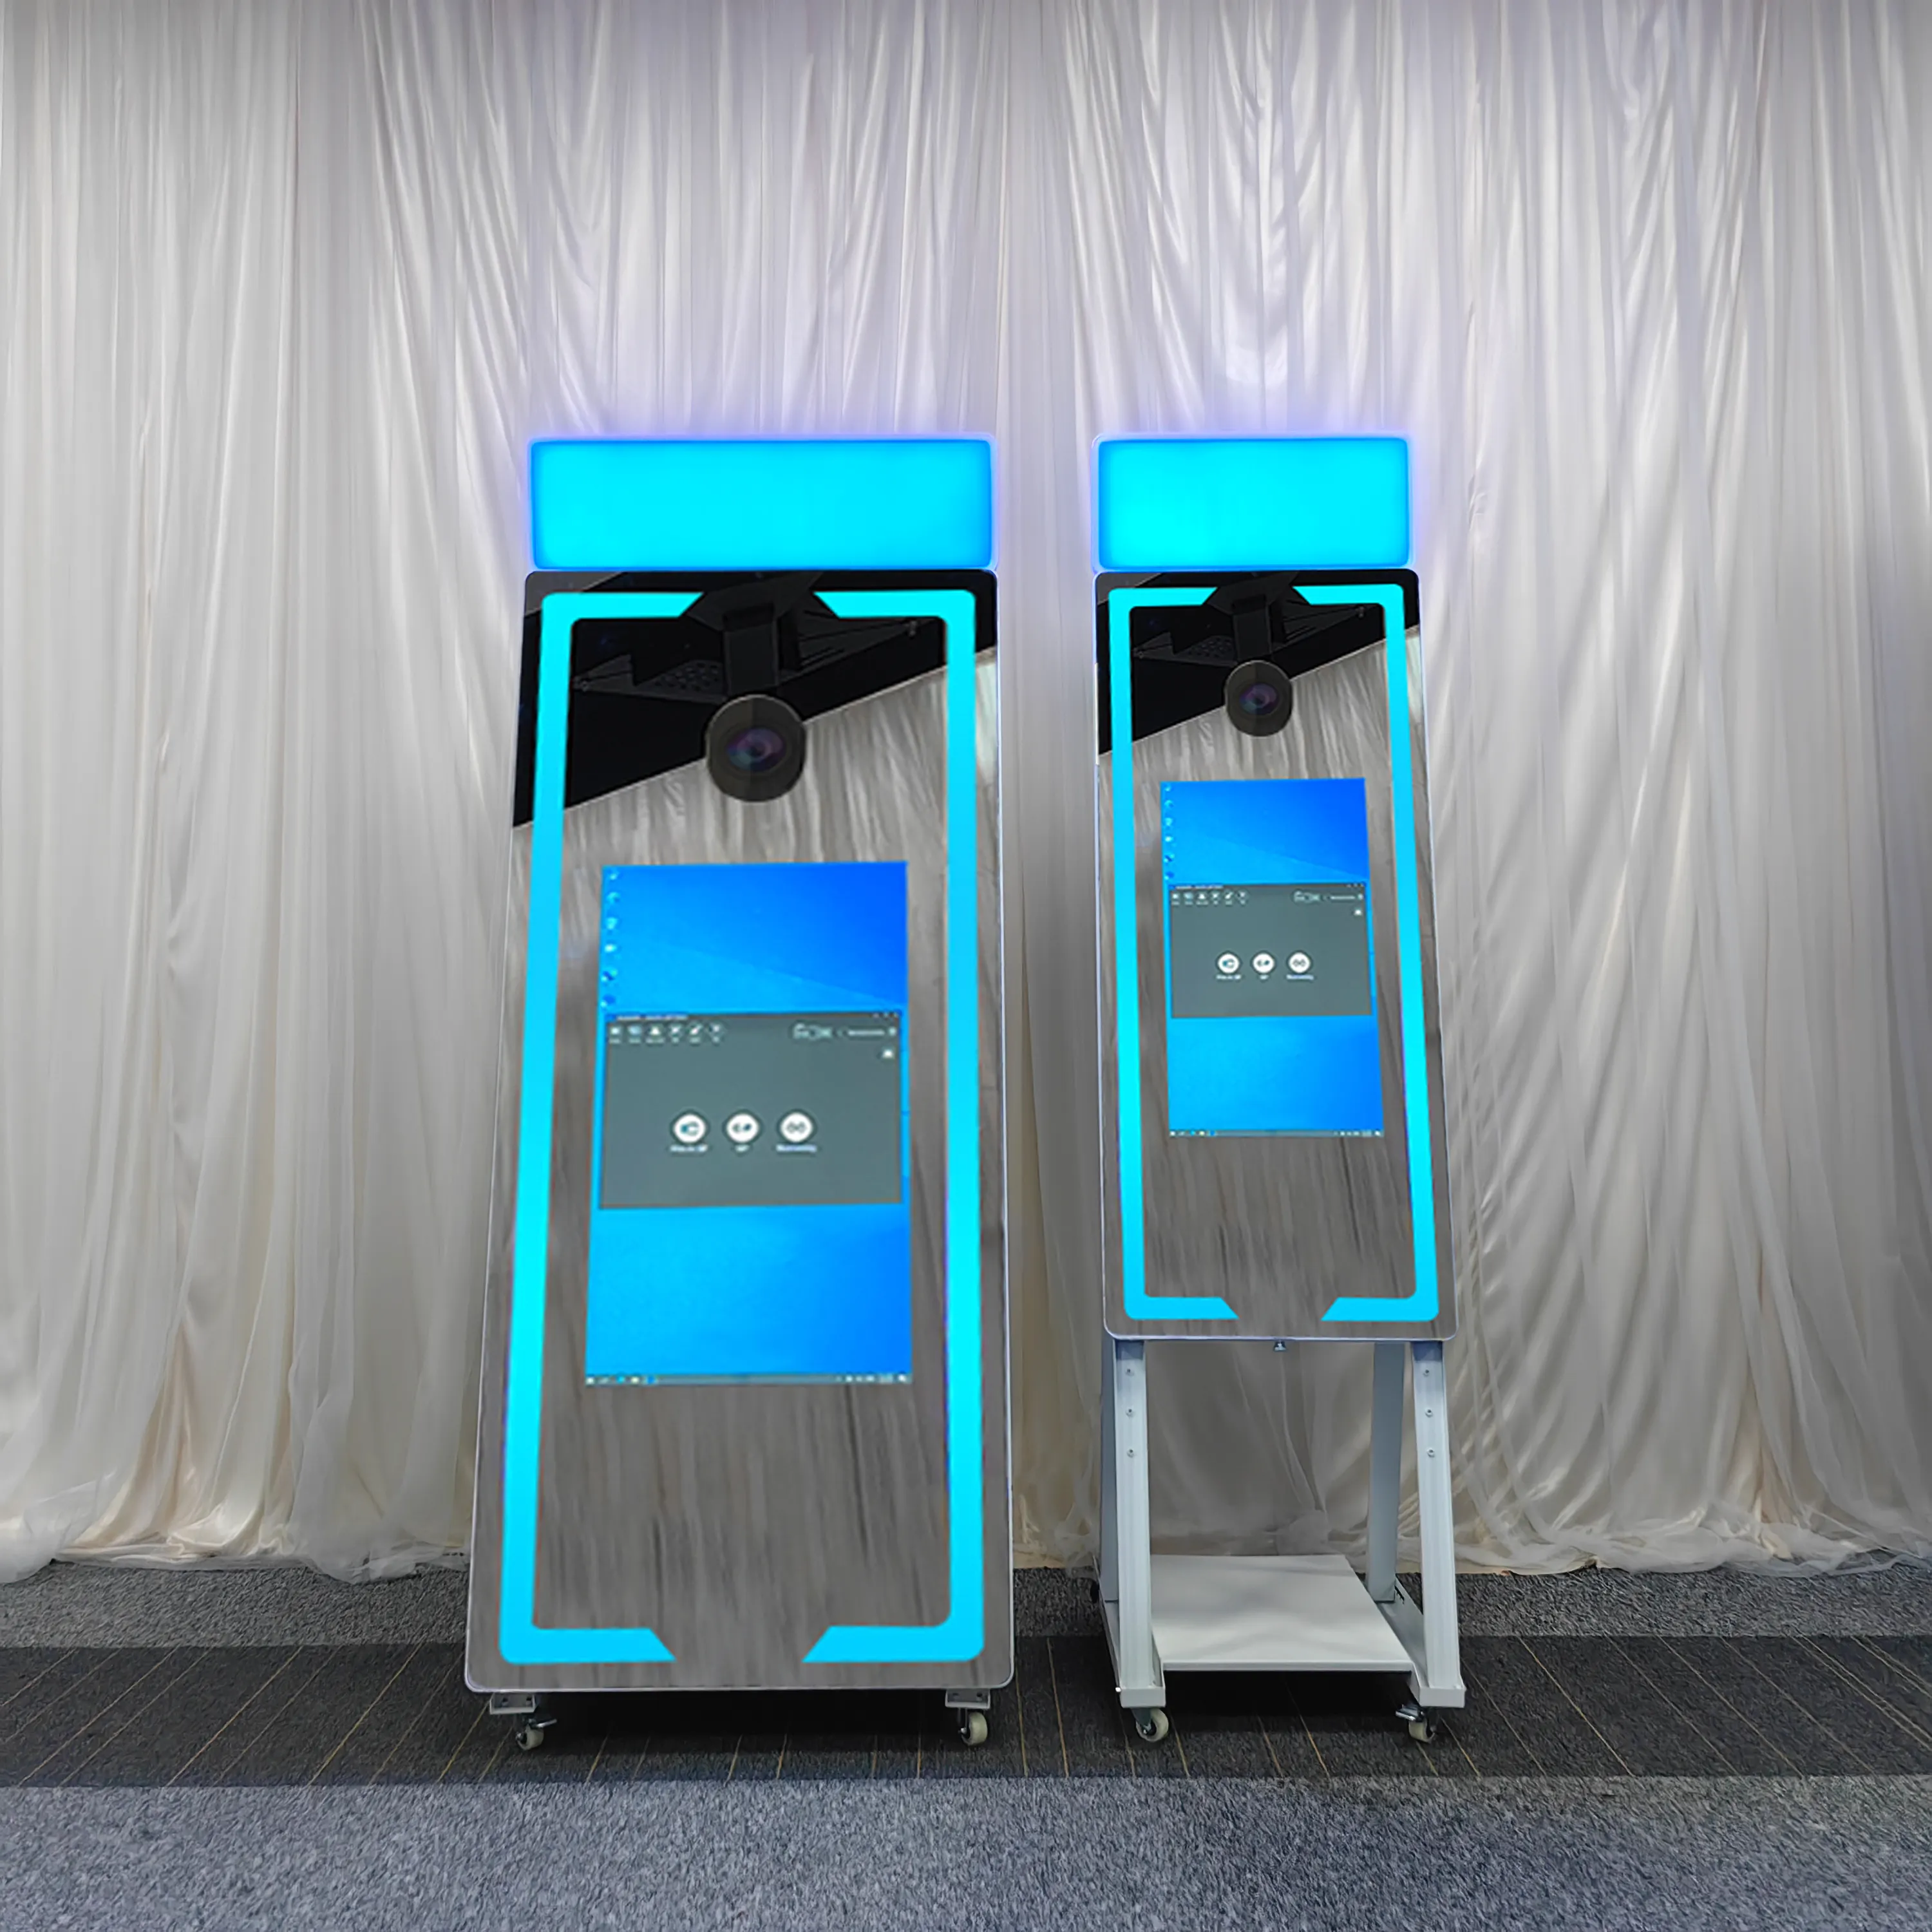 Marco de metal LED al por mayor boda selfie 45/65 pulgadas espejo mágico cabina de fotos pantalla táctil con cámara e impresora para eventos